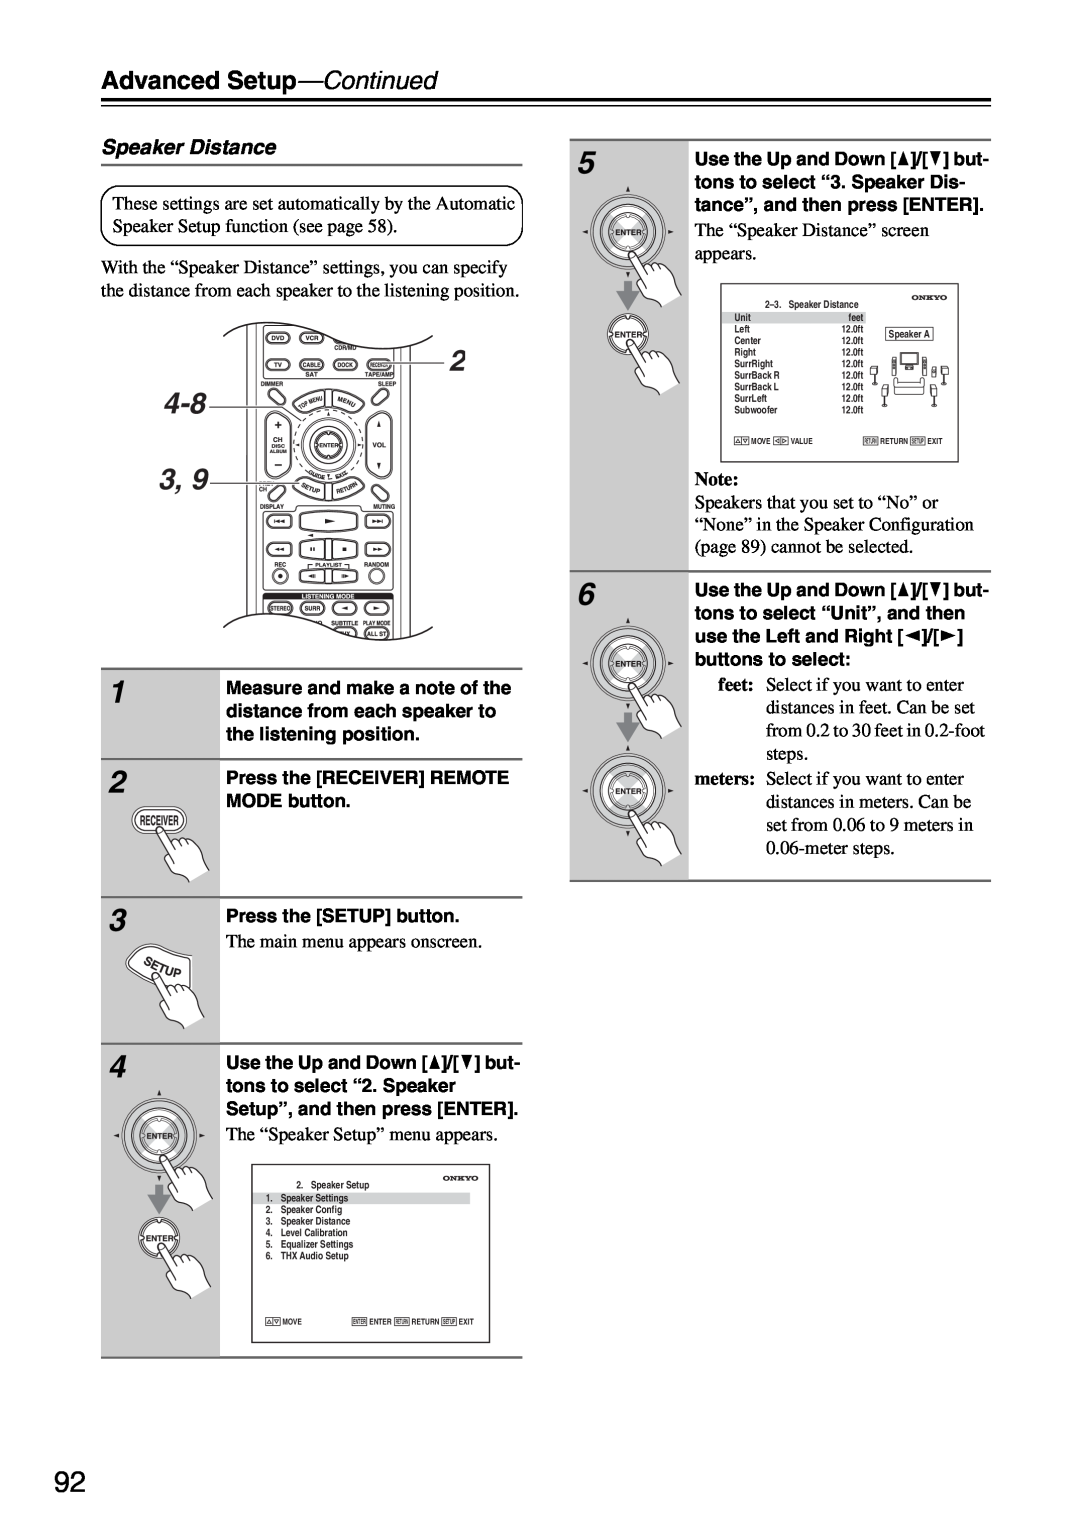 Onkyo PR-SC886 instruction manual Speaker Distance, Advanced Setup—Continued, The main menu appears onscreen 